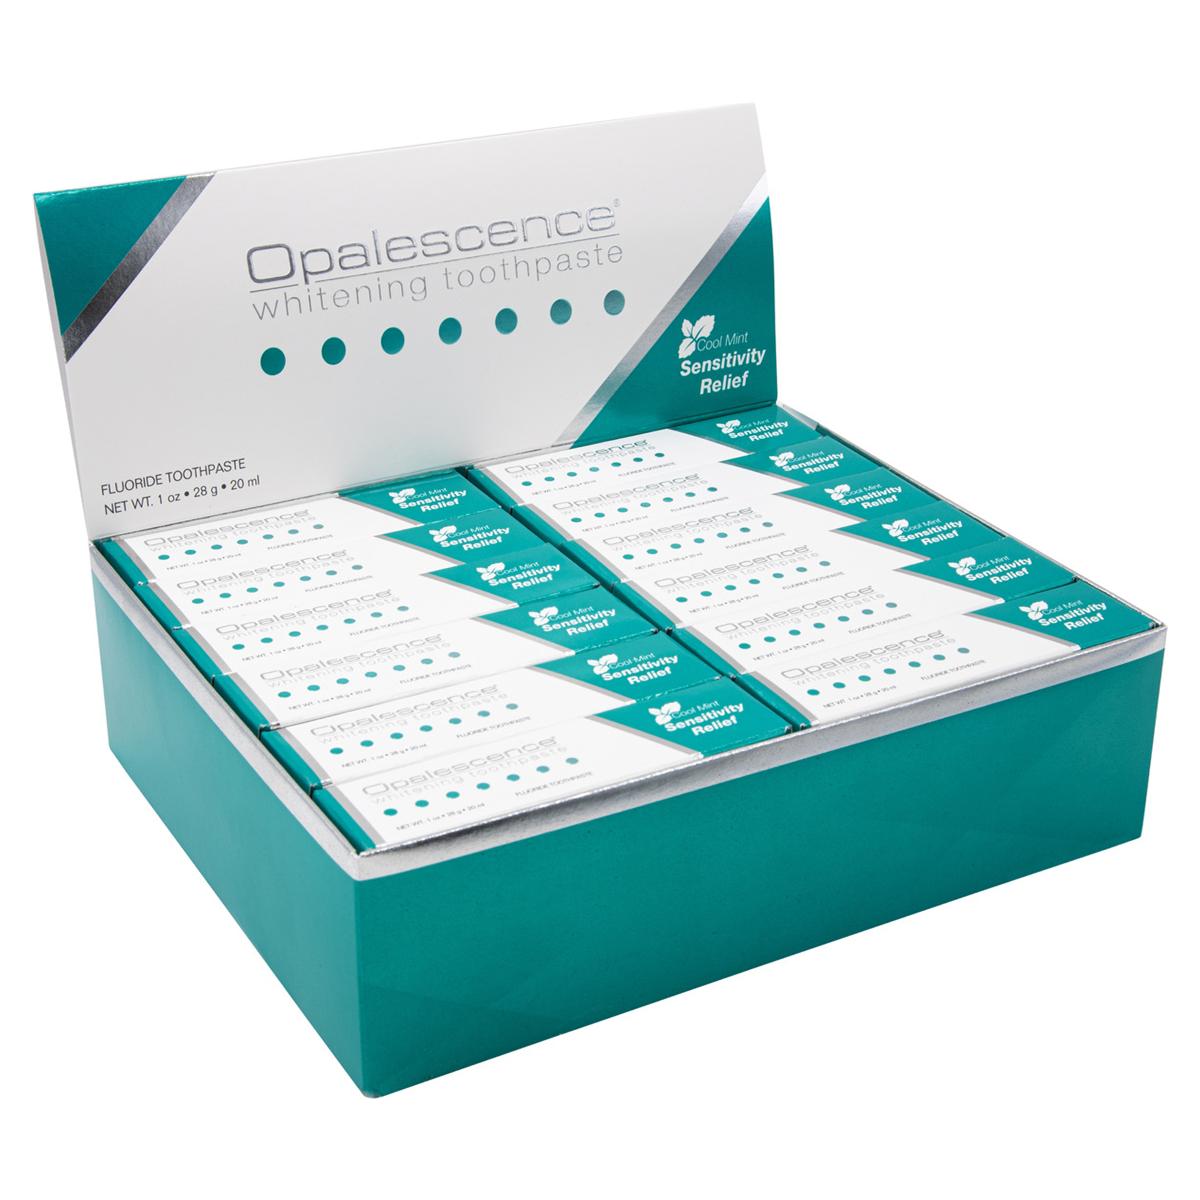 Opalescence Whitening pte dentifrice - sensitive - UP 3472, 24x 29,6 ml - Sensitivity Relief